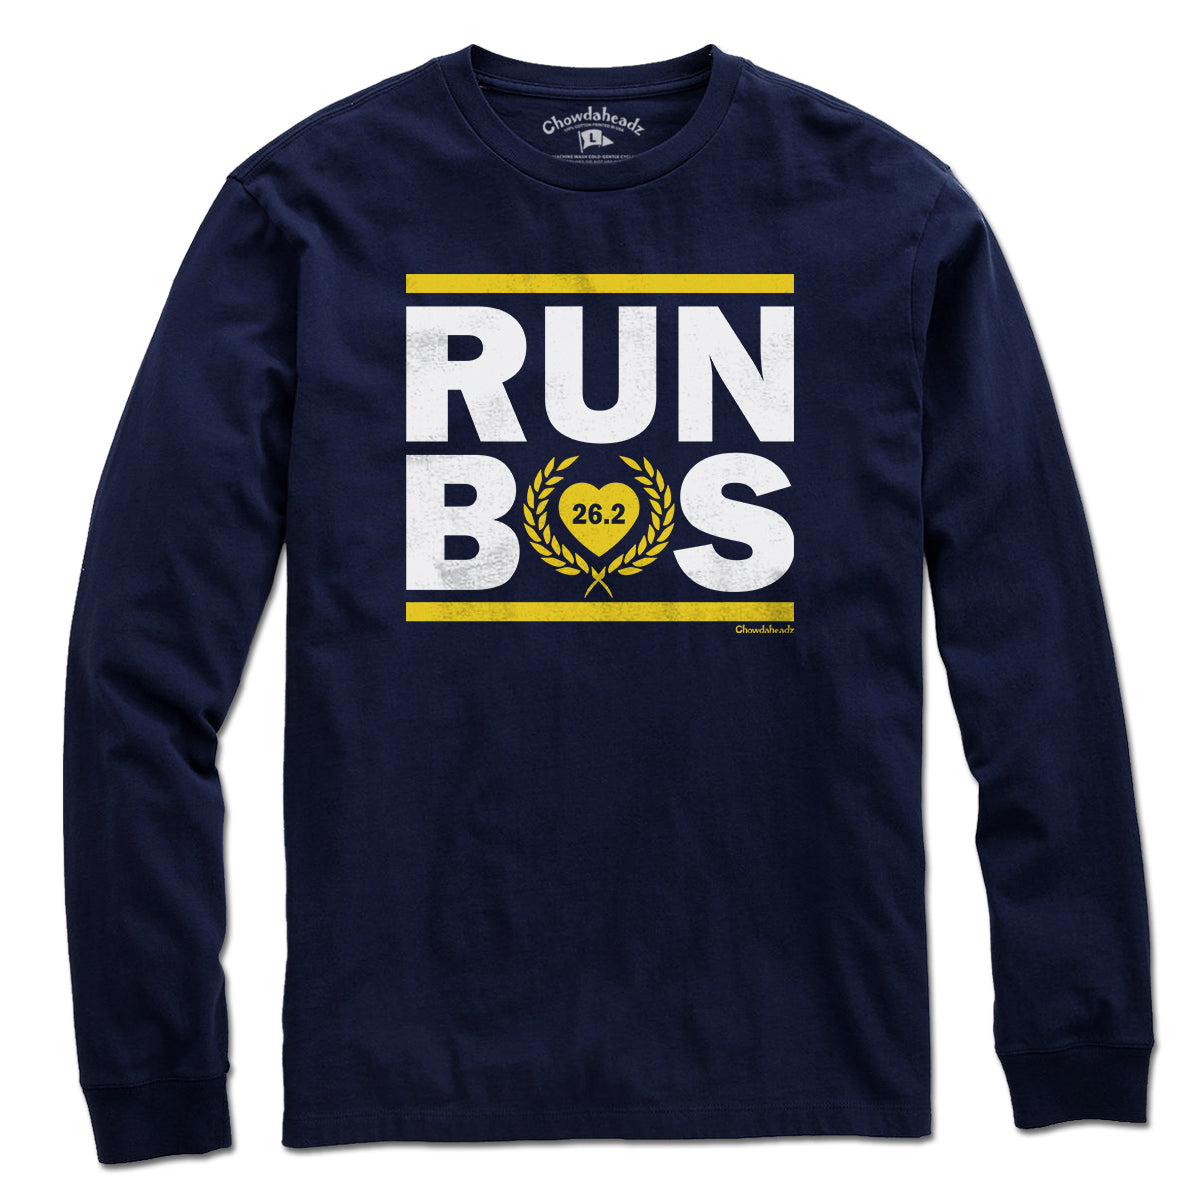 Run Bos 26.2 Heart T-Shirt - Chowdaheadz